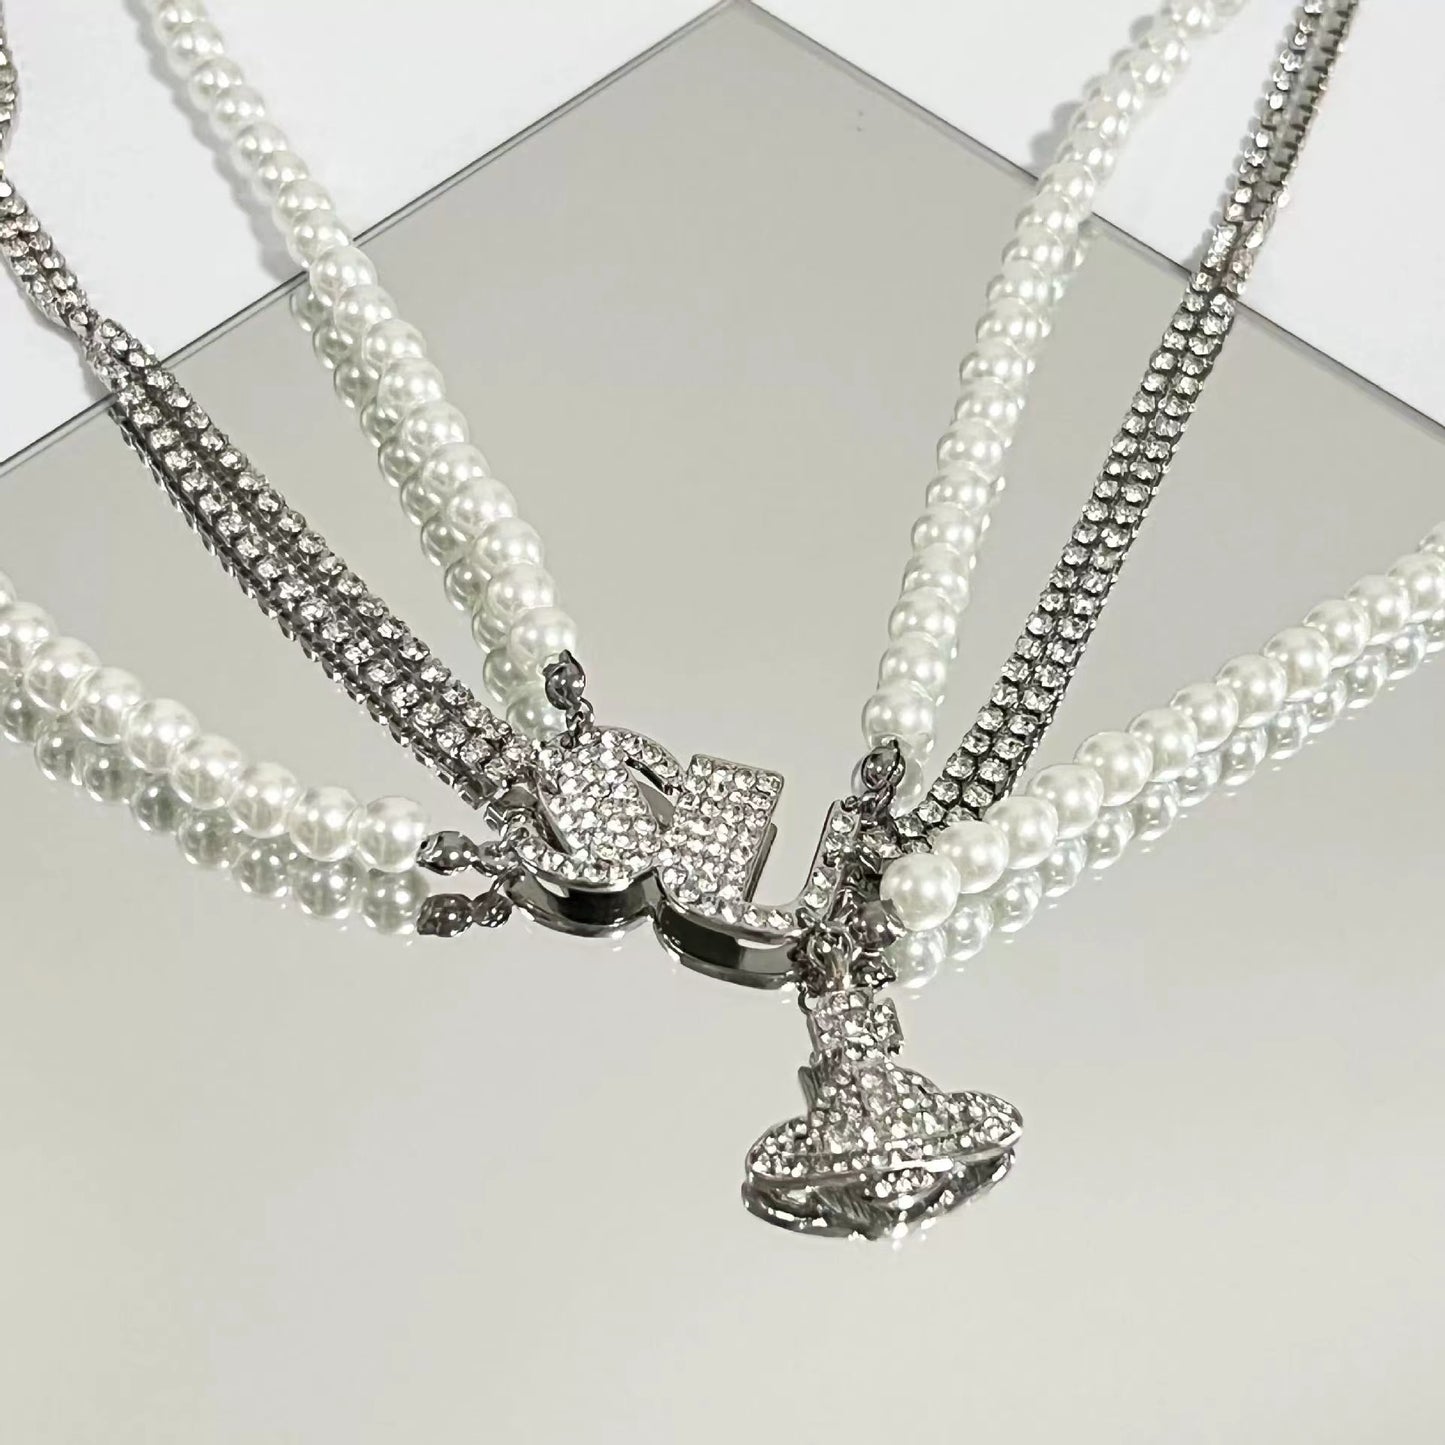 Fashionable multi-layered design sense sparkling diamonds Queen West planet pearl necklace